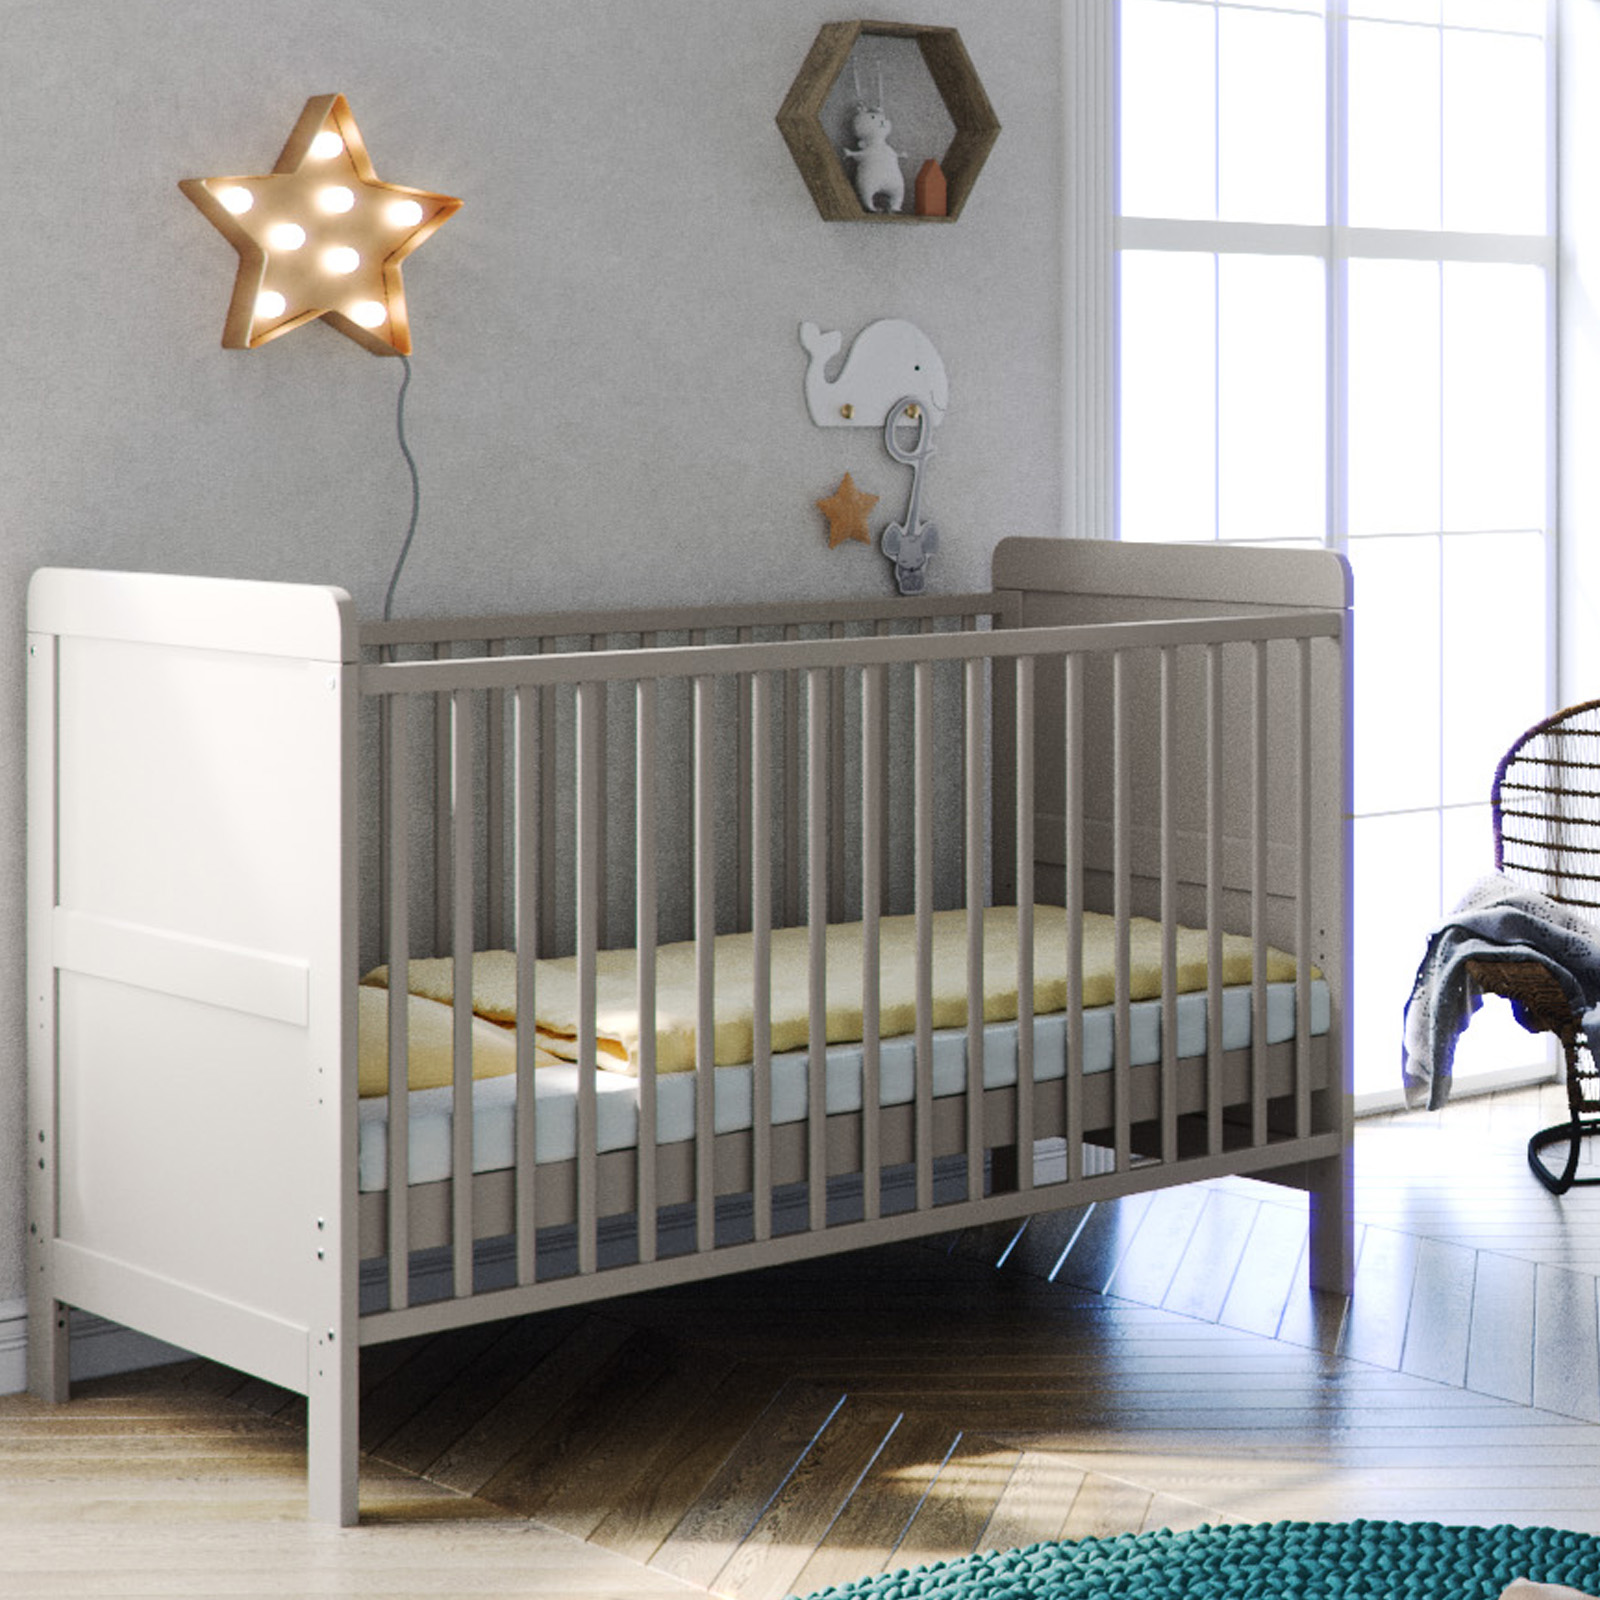 Little Acorns Classic Milano Cot Bed with Deluxe Fibre Mattress - Light Grey